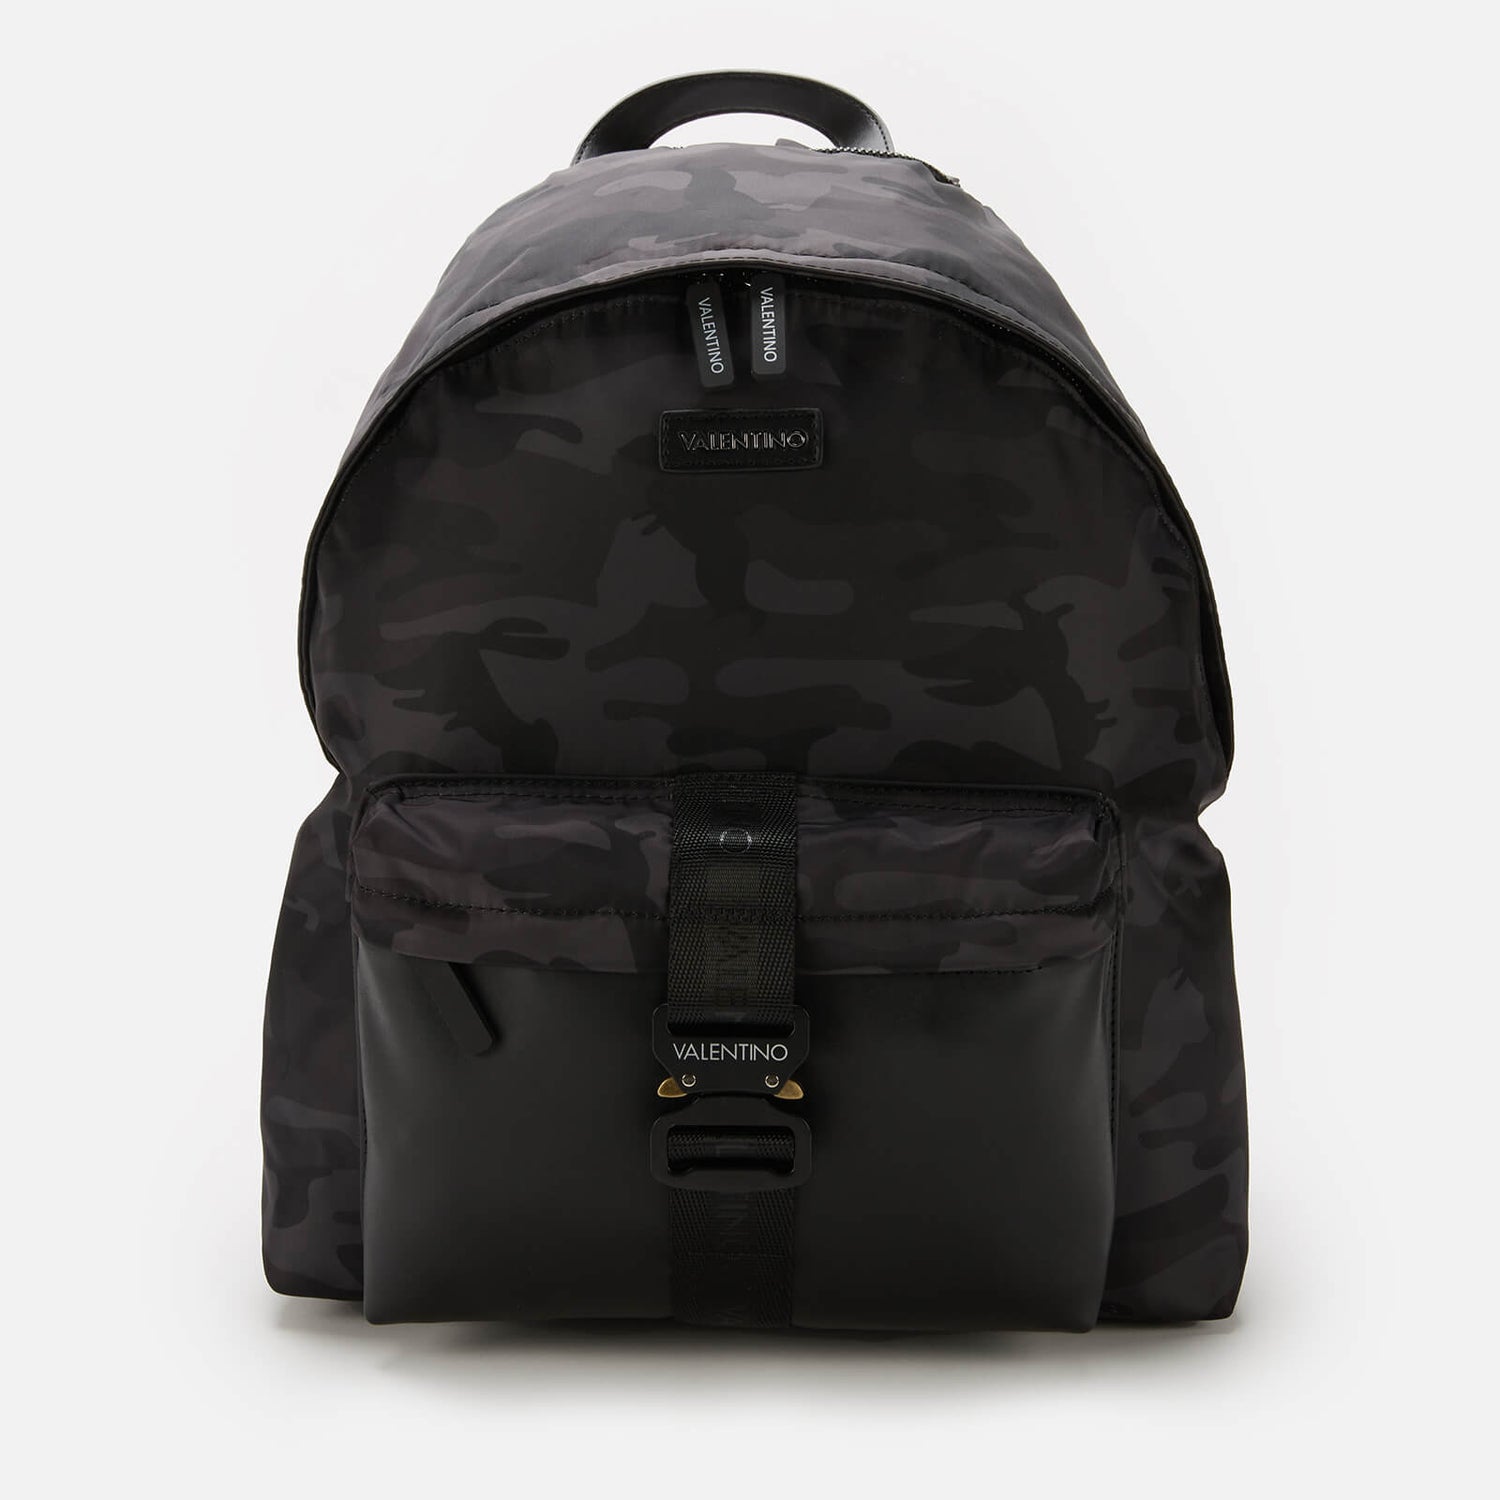 Valentino Men's Grappa Backpack - Black